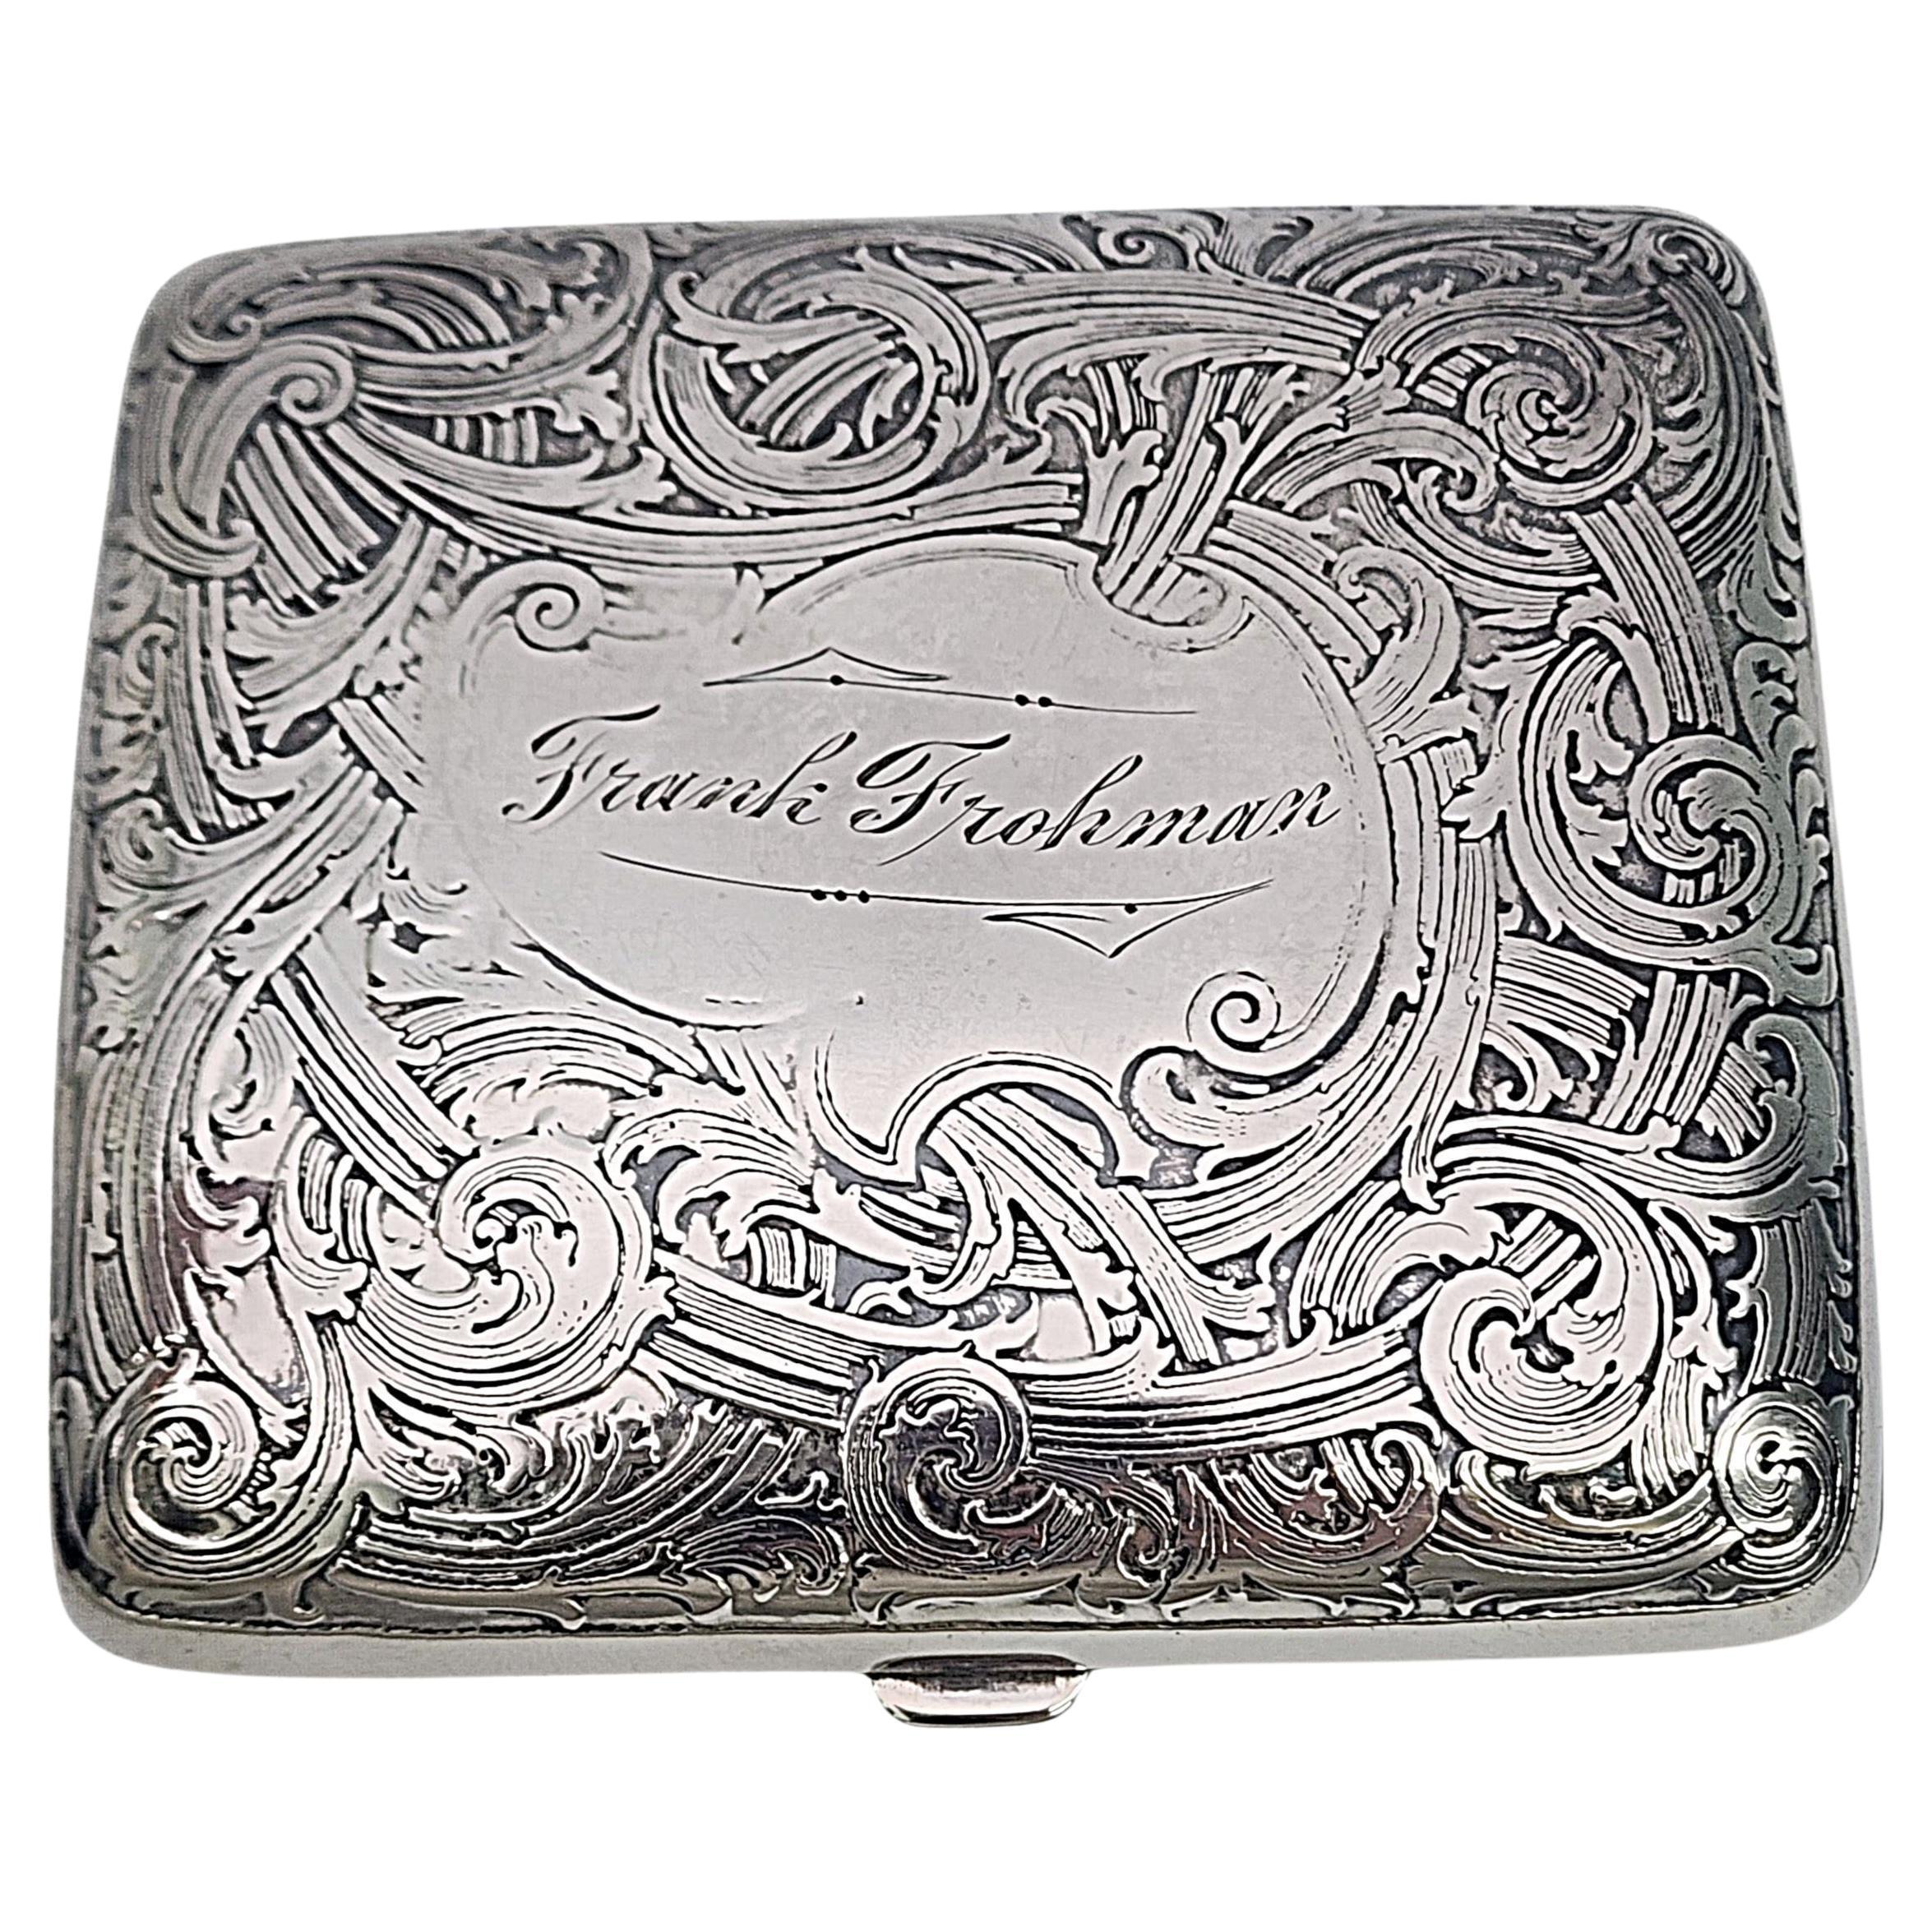 Antique William B Kerr Sterling Silver Cigarette Case w/Engraving #16526 For Sale